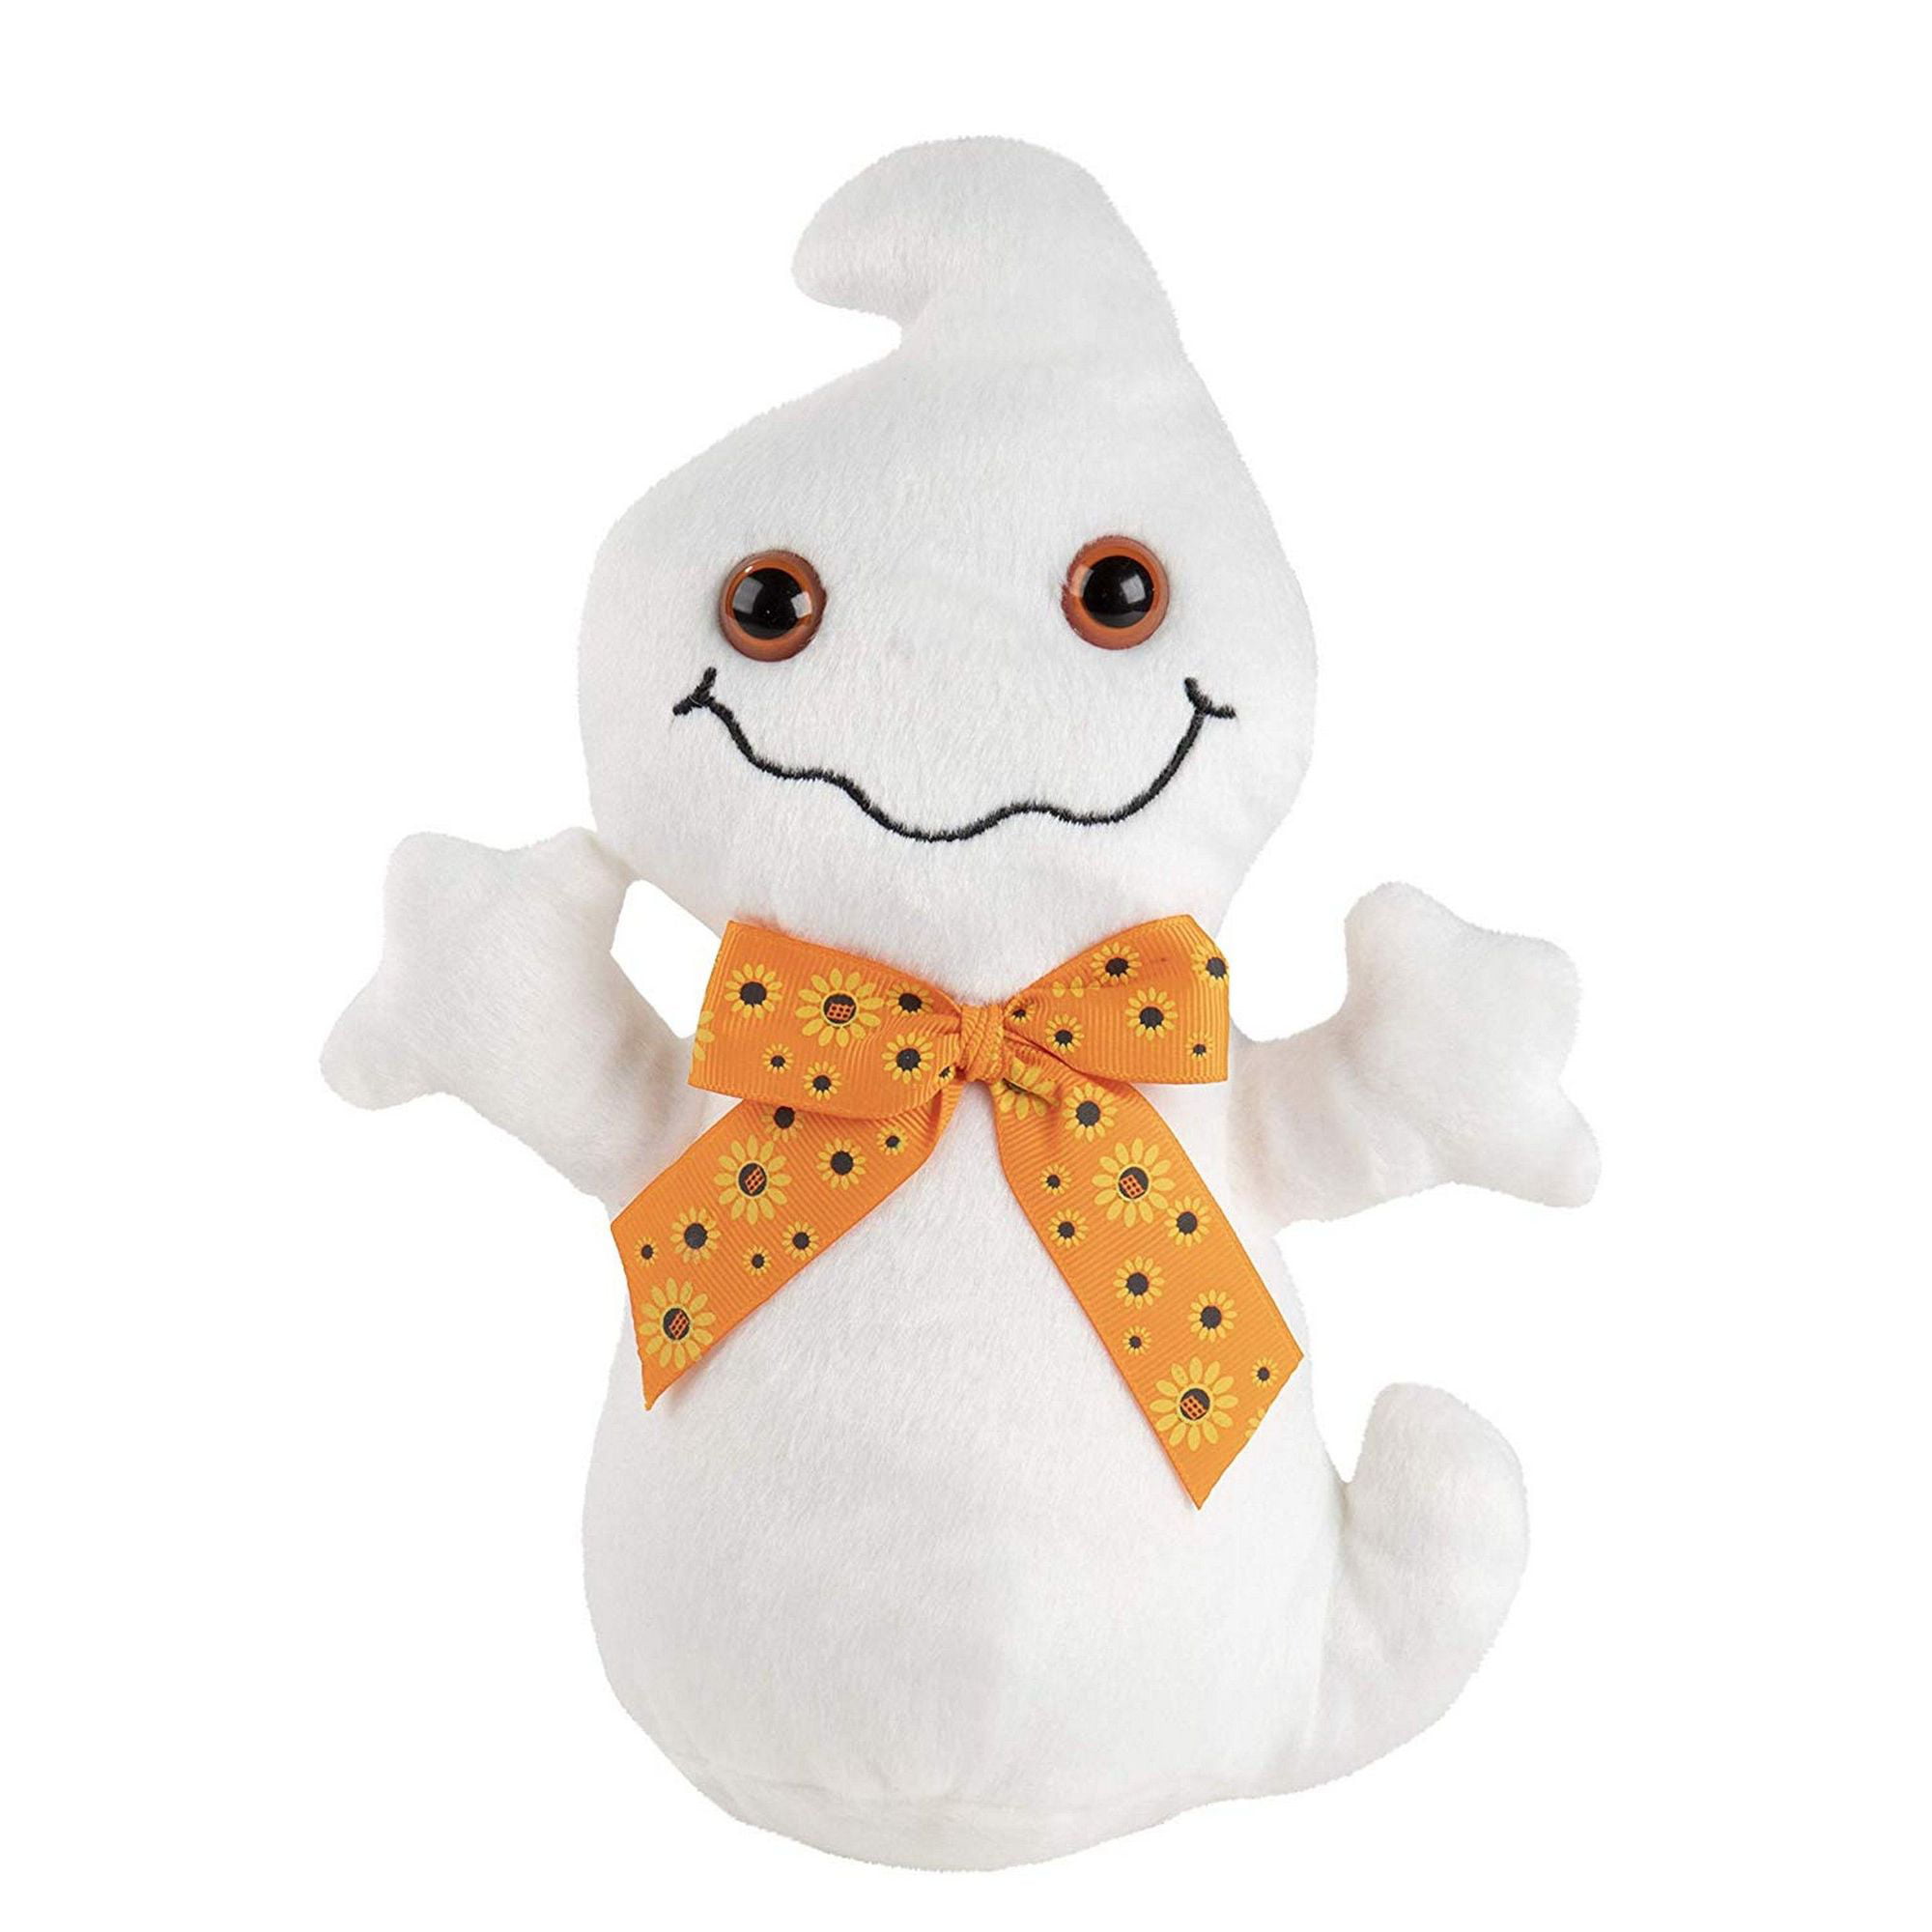 Cute Ghost Plush Toy, Friendly Spooky 